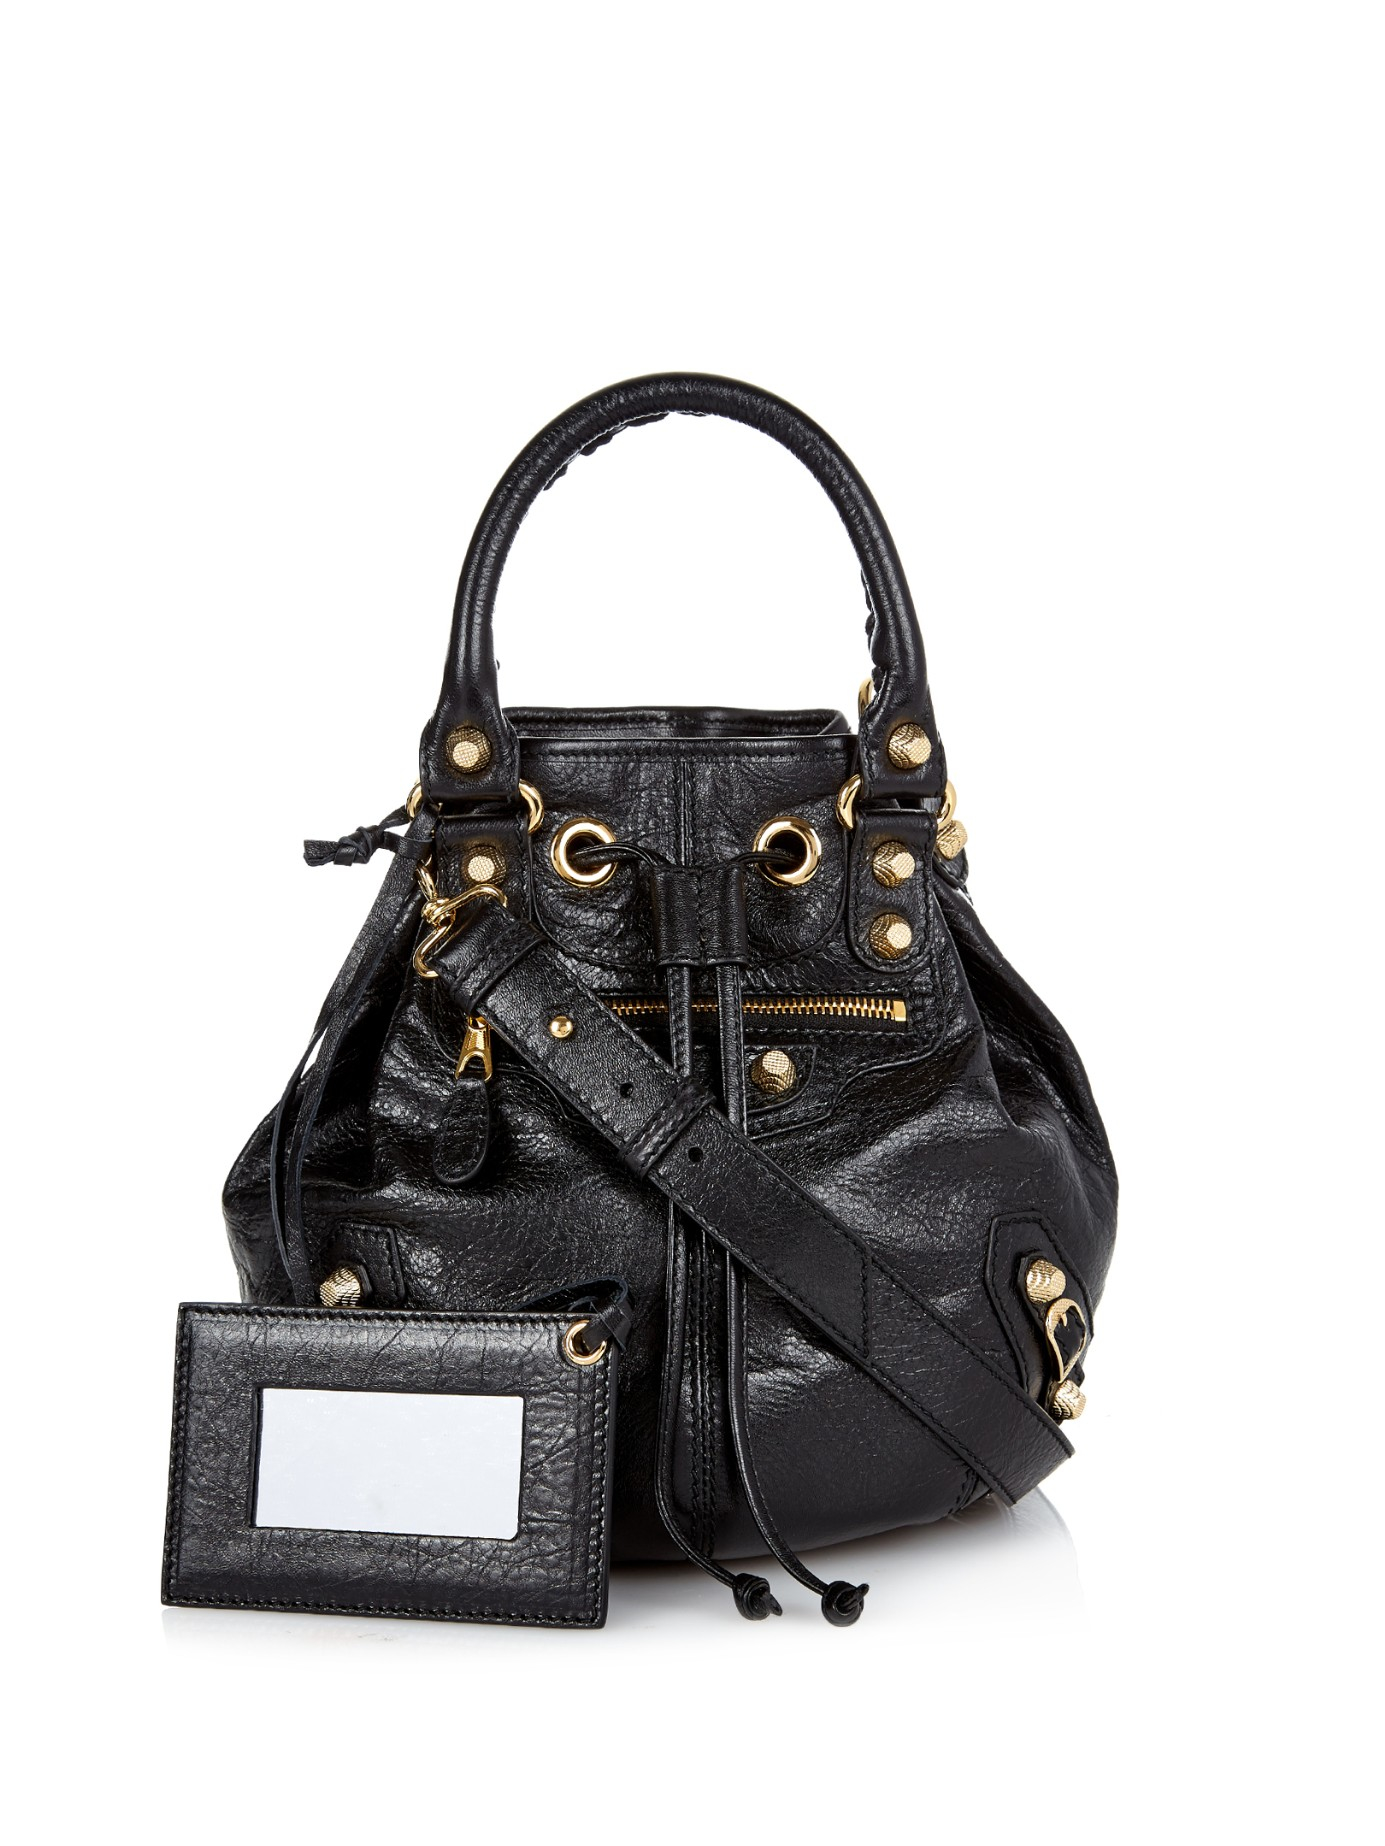 slump vækst Analytiker Balenciaga Giant Pom-Pom Leather Bucket Bag in Black | Lyst